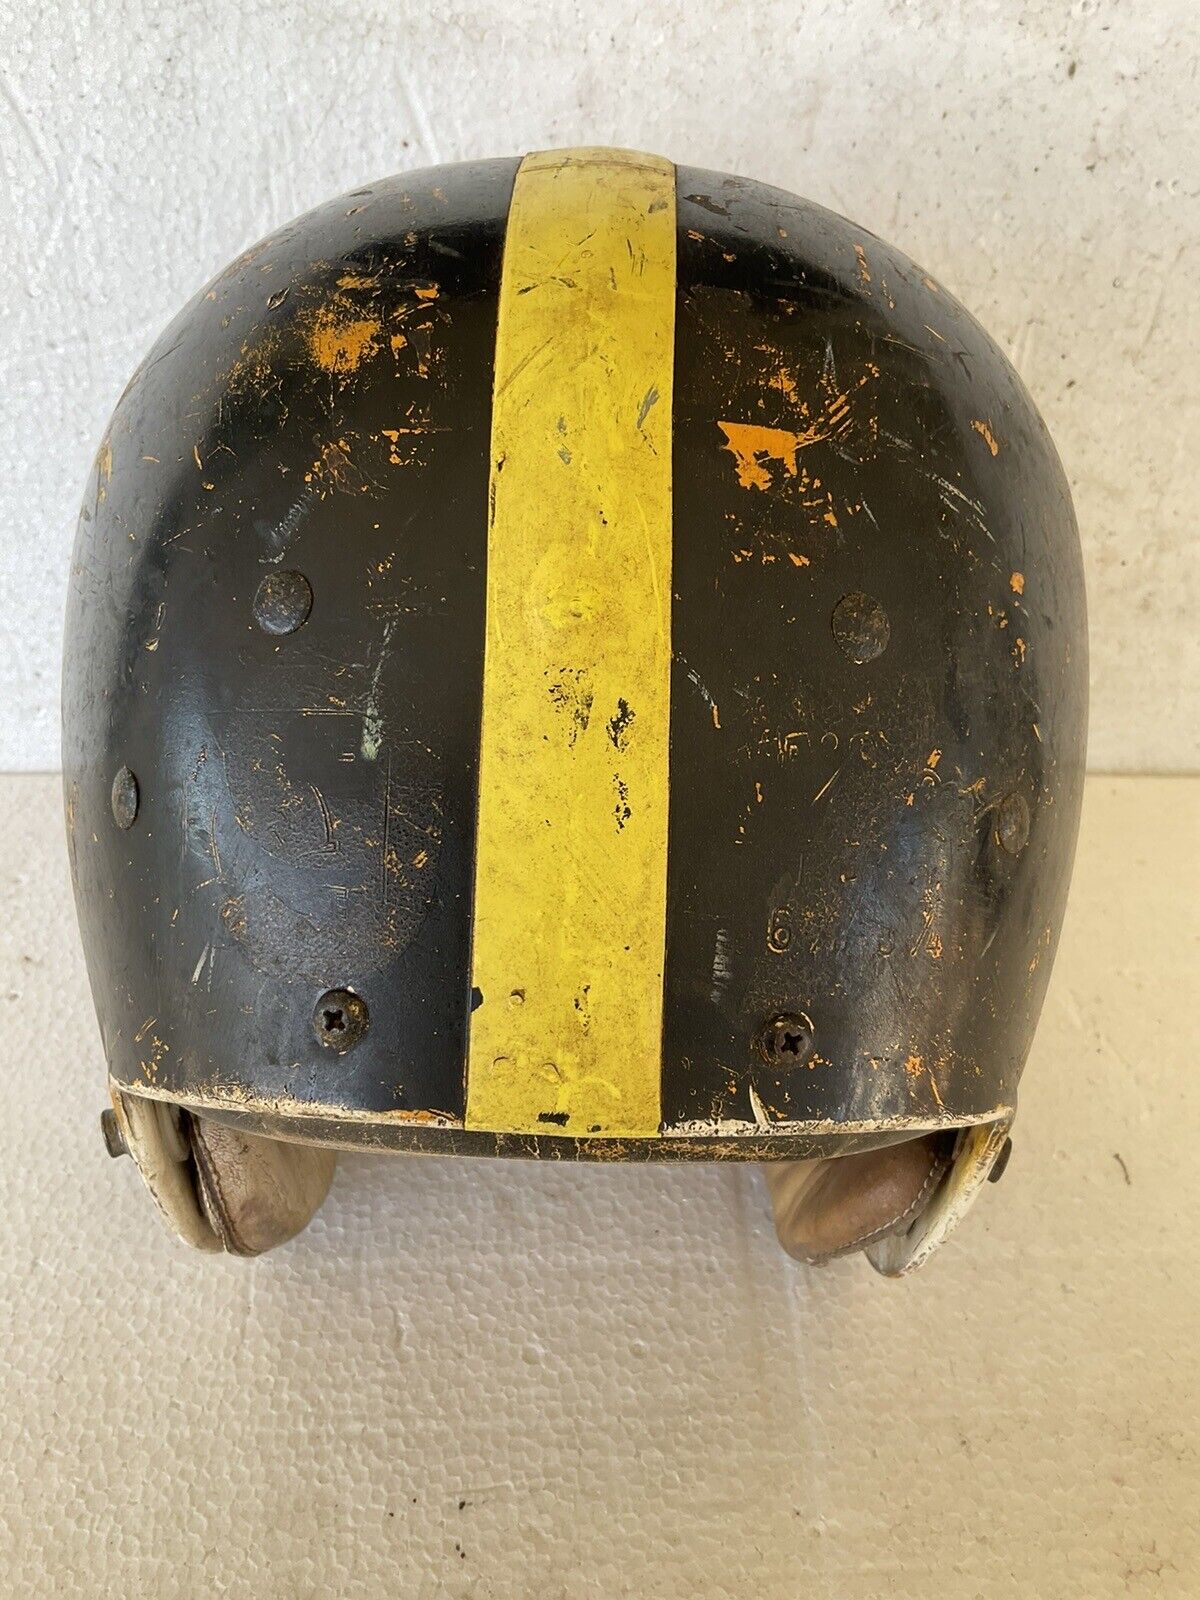 Vintage Original Wilson F2000 Football Helmet Project Helmet Sports Mem, Cards & Fan Shop:Fan Apparel & Souvenirs:Football-NFL Wilson   